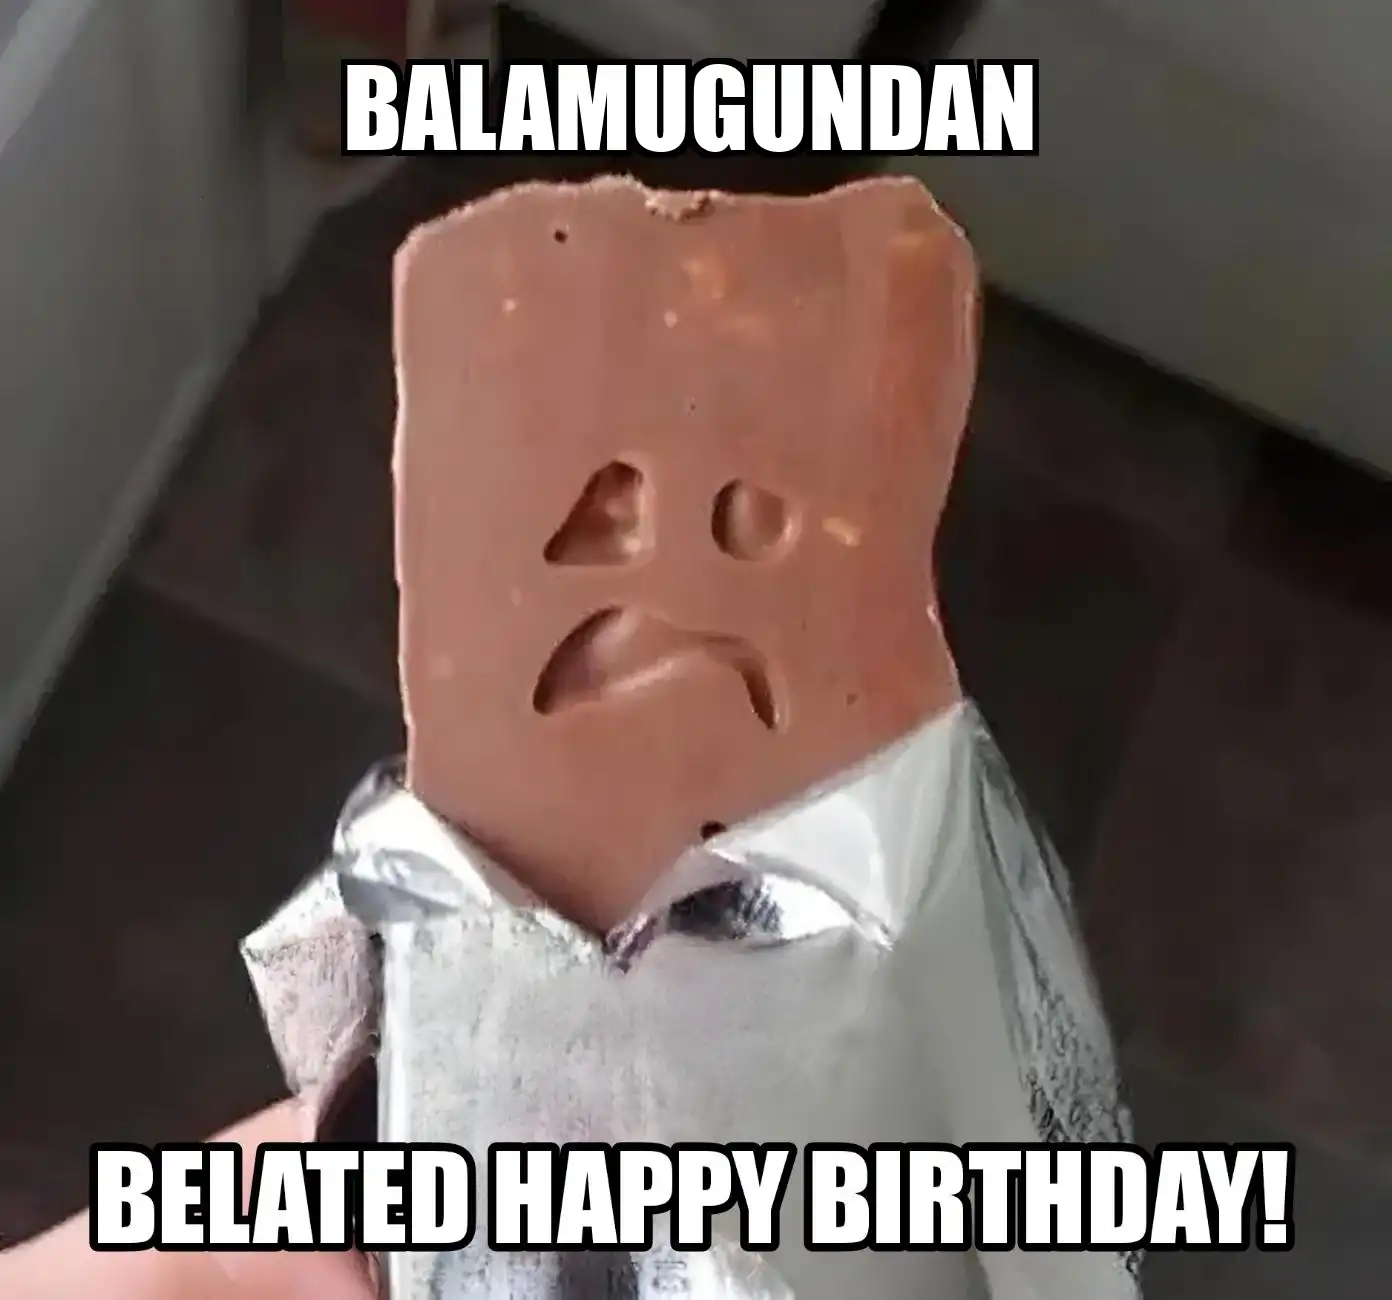 Happy Birthday Balamugundan Belated Happy Birthday Meme